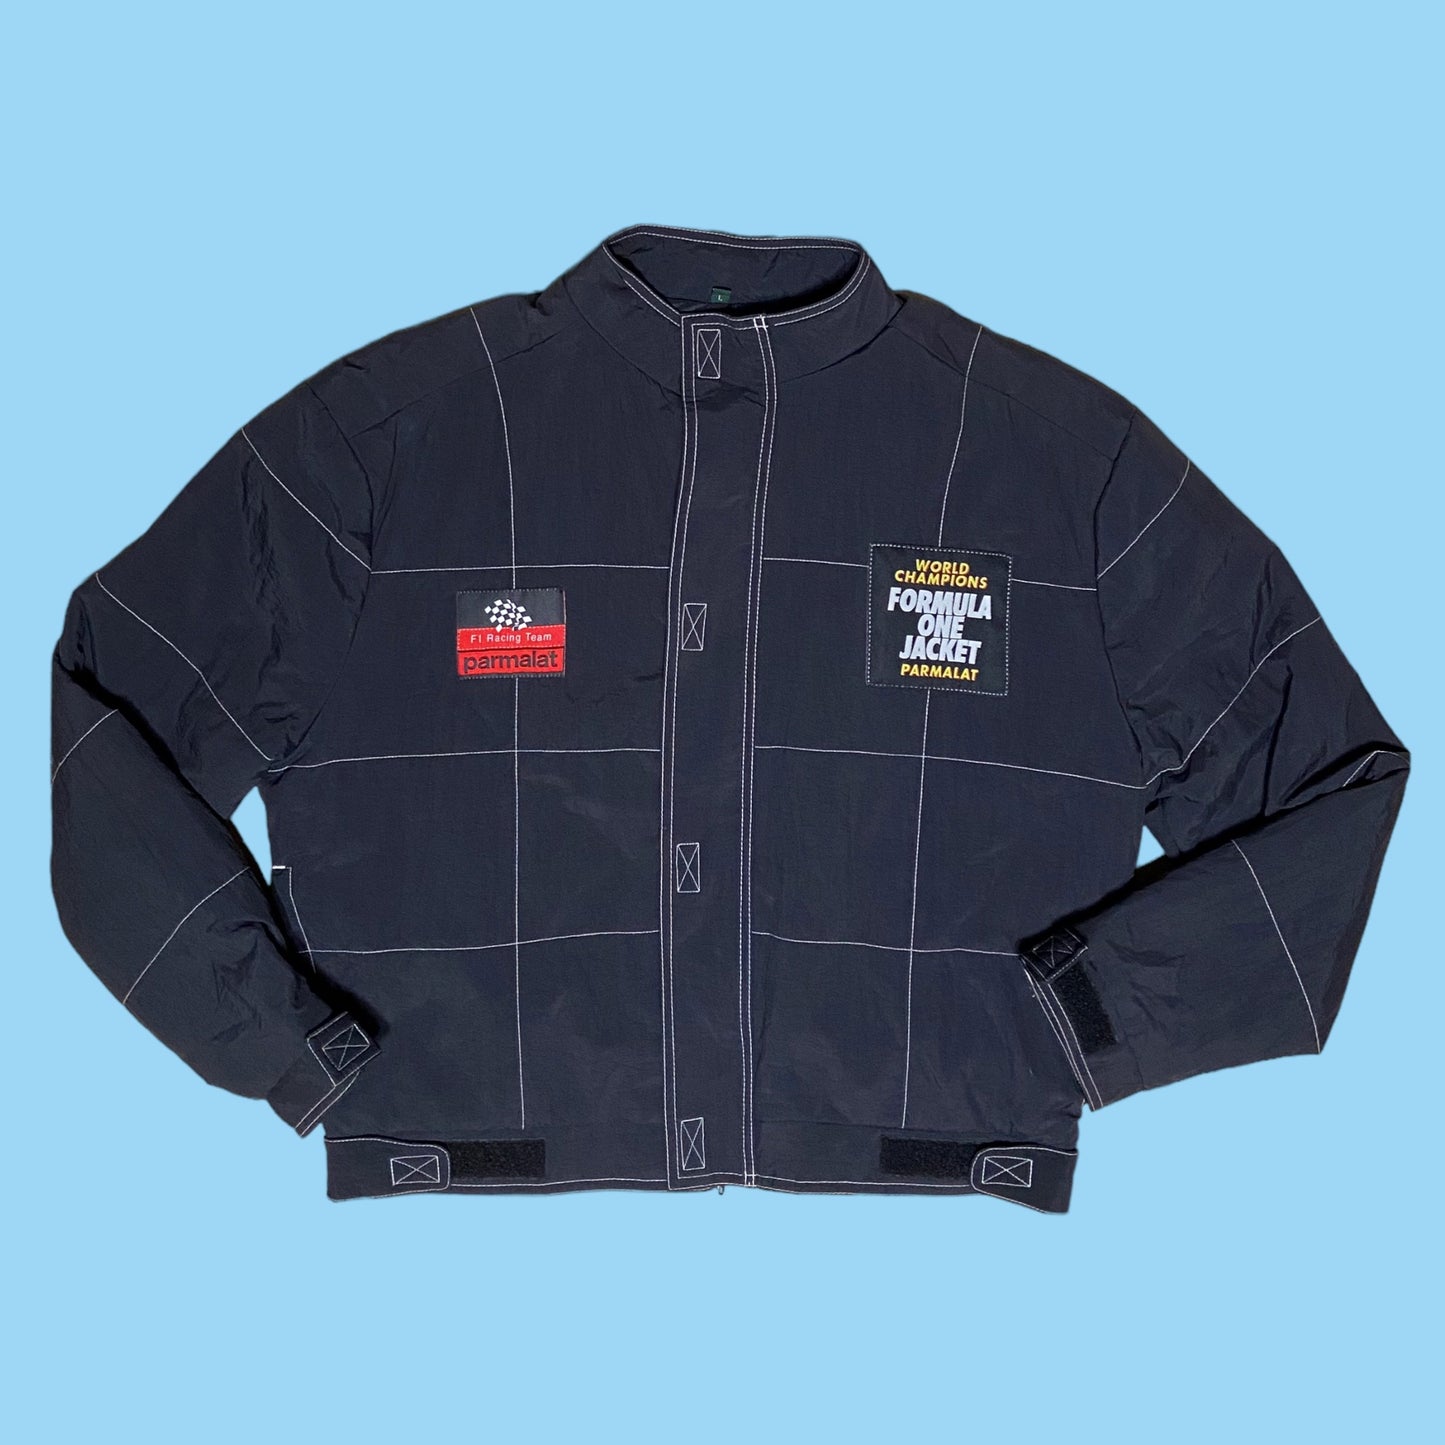 Vintage Parmalat F1 racing team jacket - L